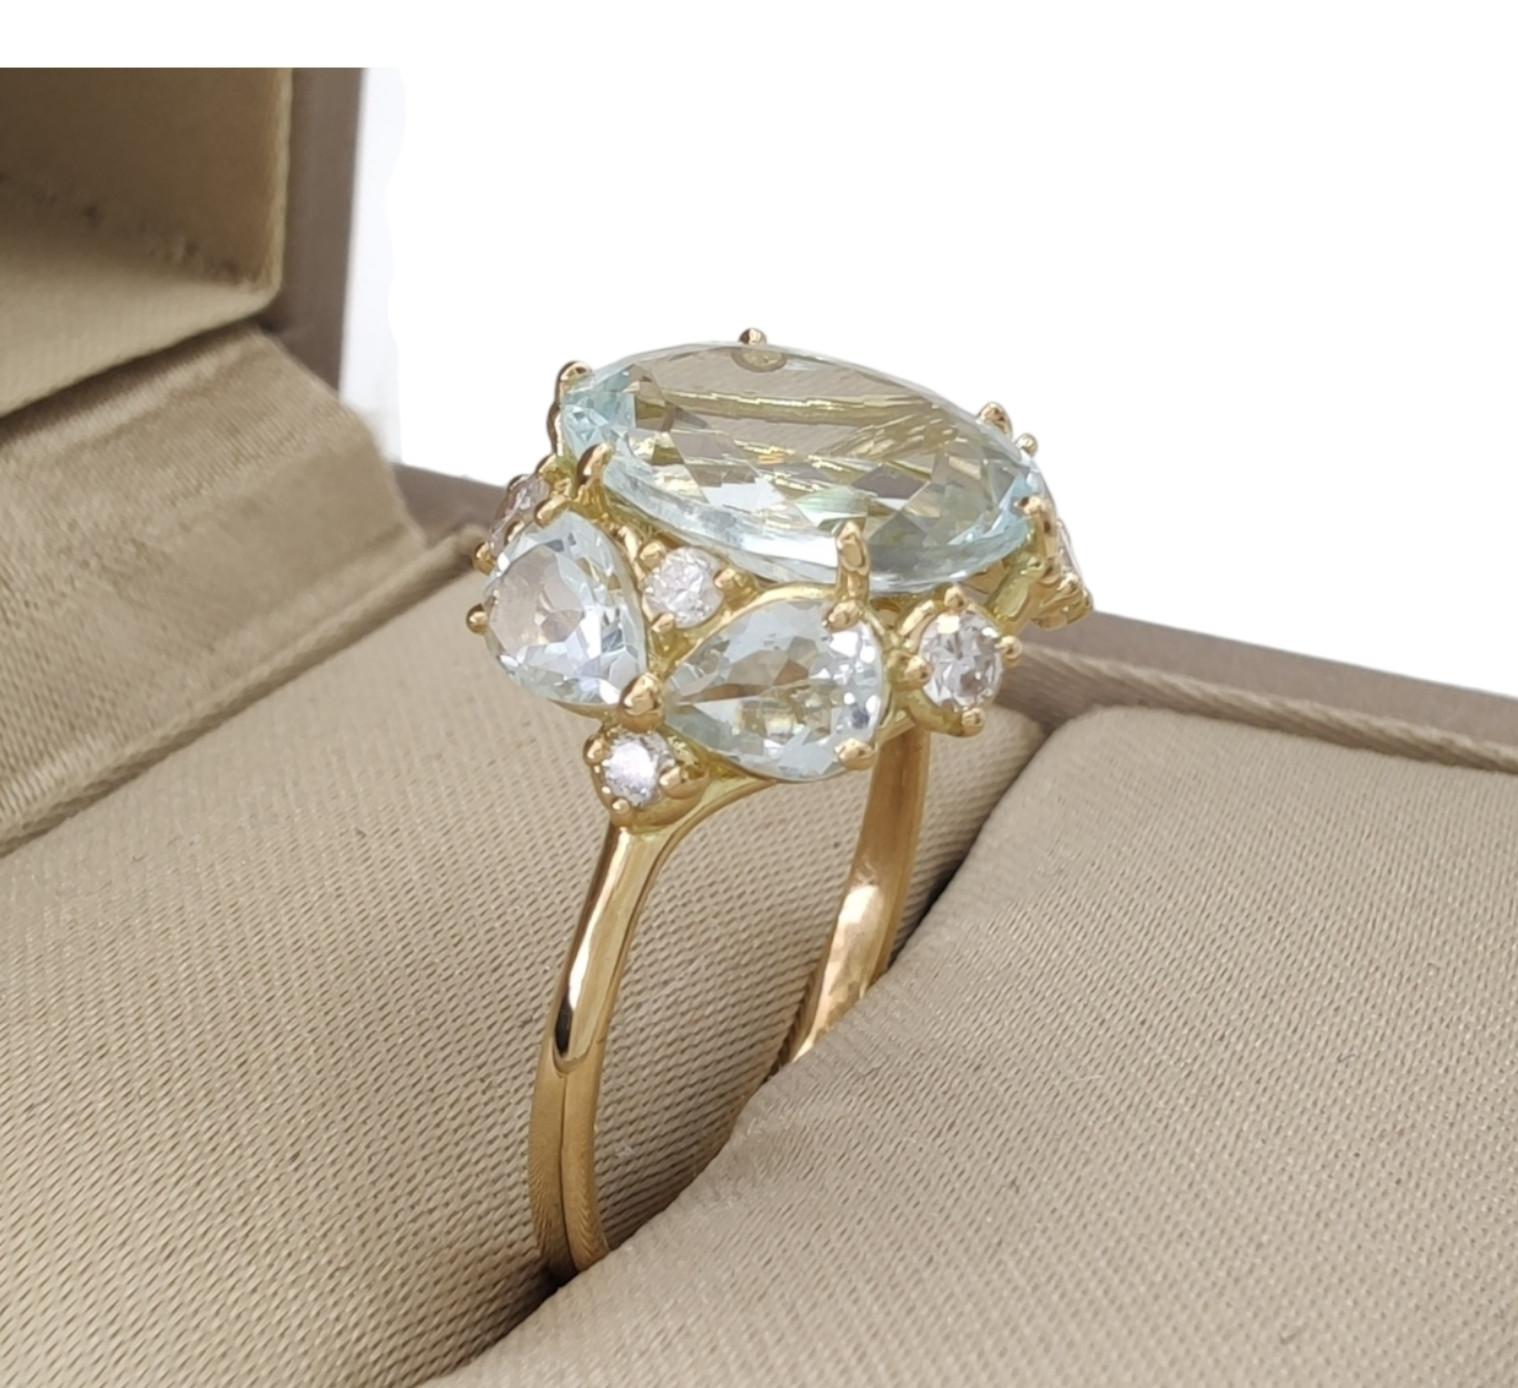 2, 69ct Oval Cut Aquamarine Engagement Ring, 18k Yellow Gold, Resizable 9